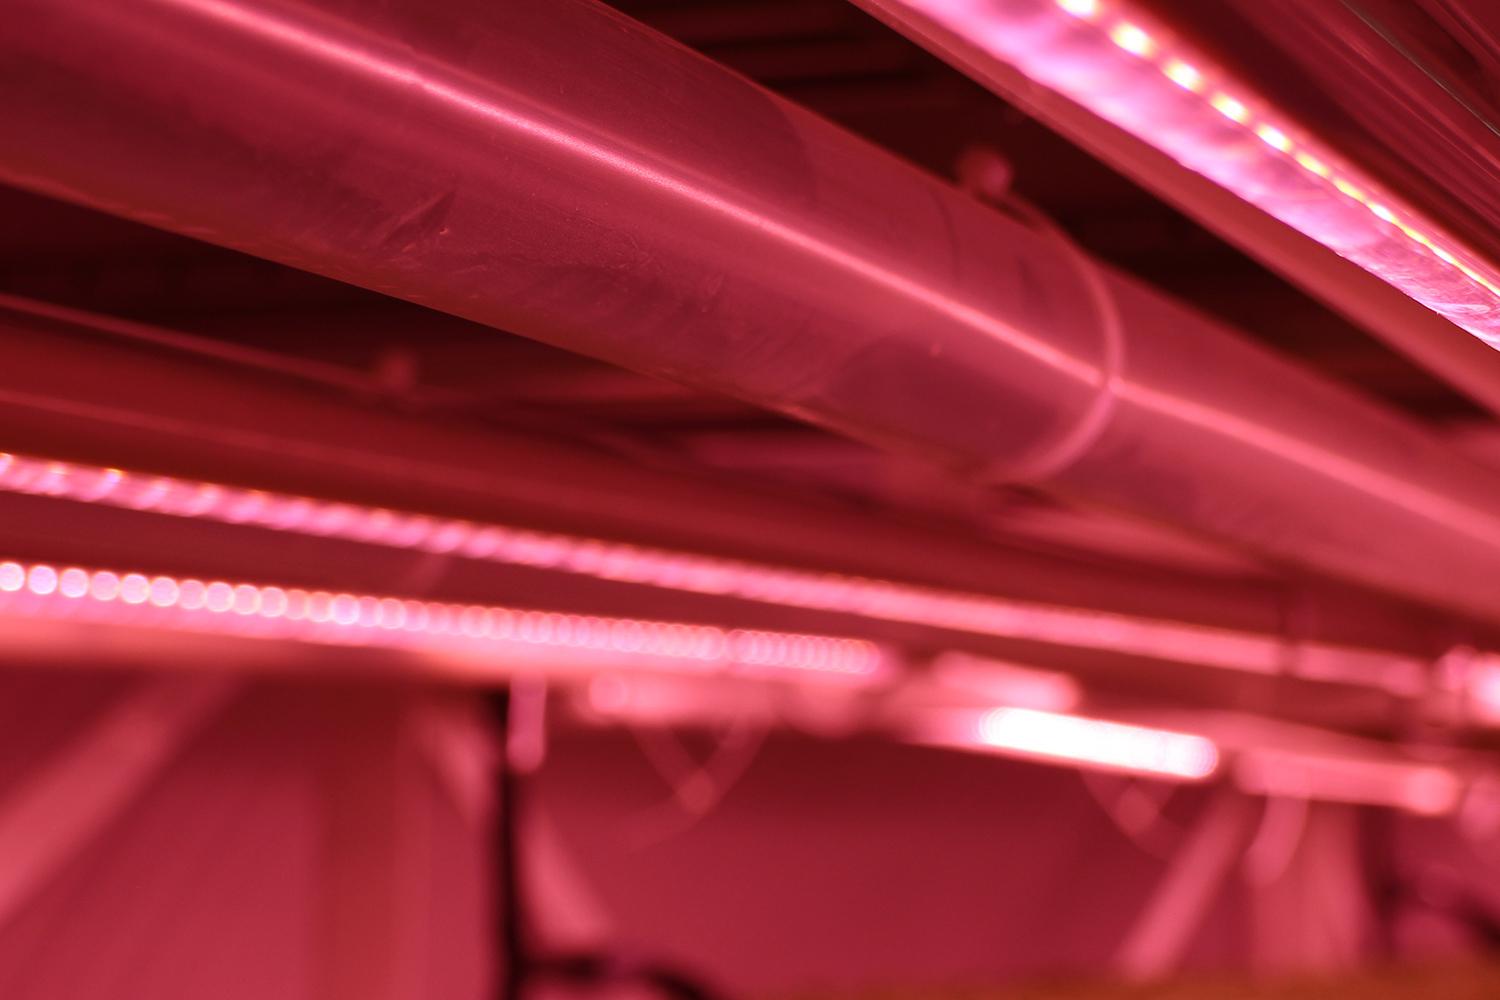 londons underground farm zero carbon food growing air tubes